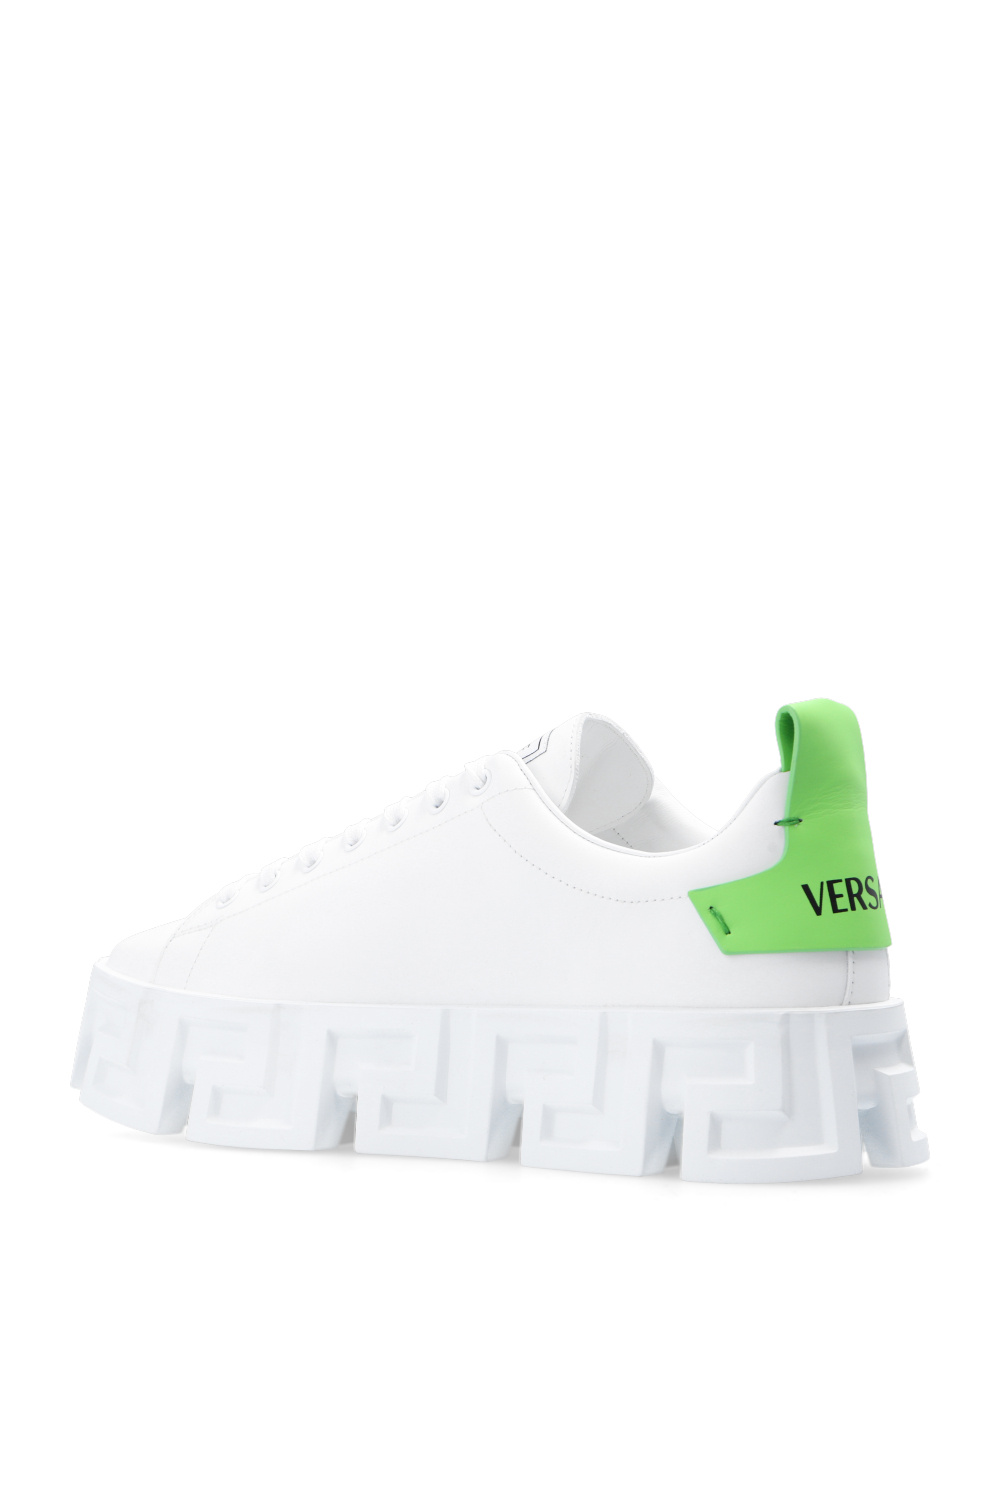 Versace 'Greca Labyrinth' sneakers | Men's Shoes | Vitkac